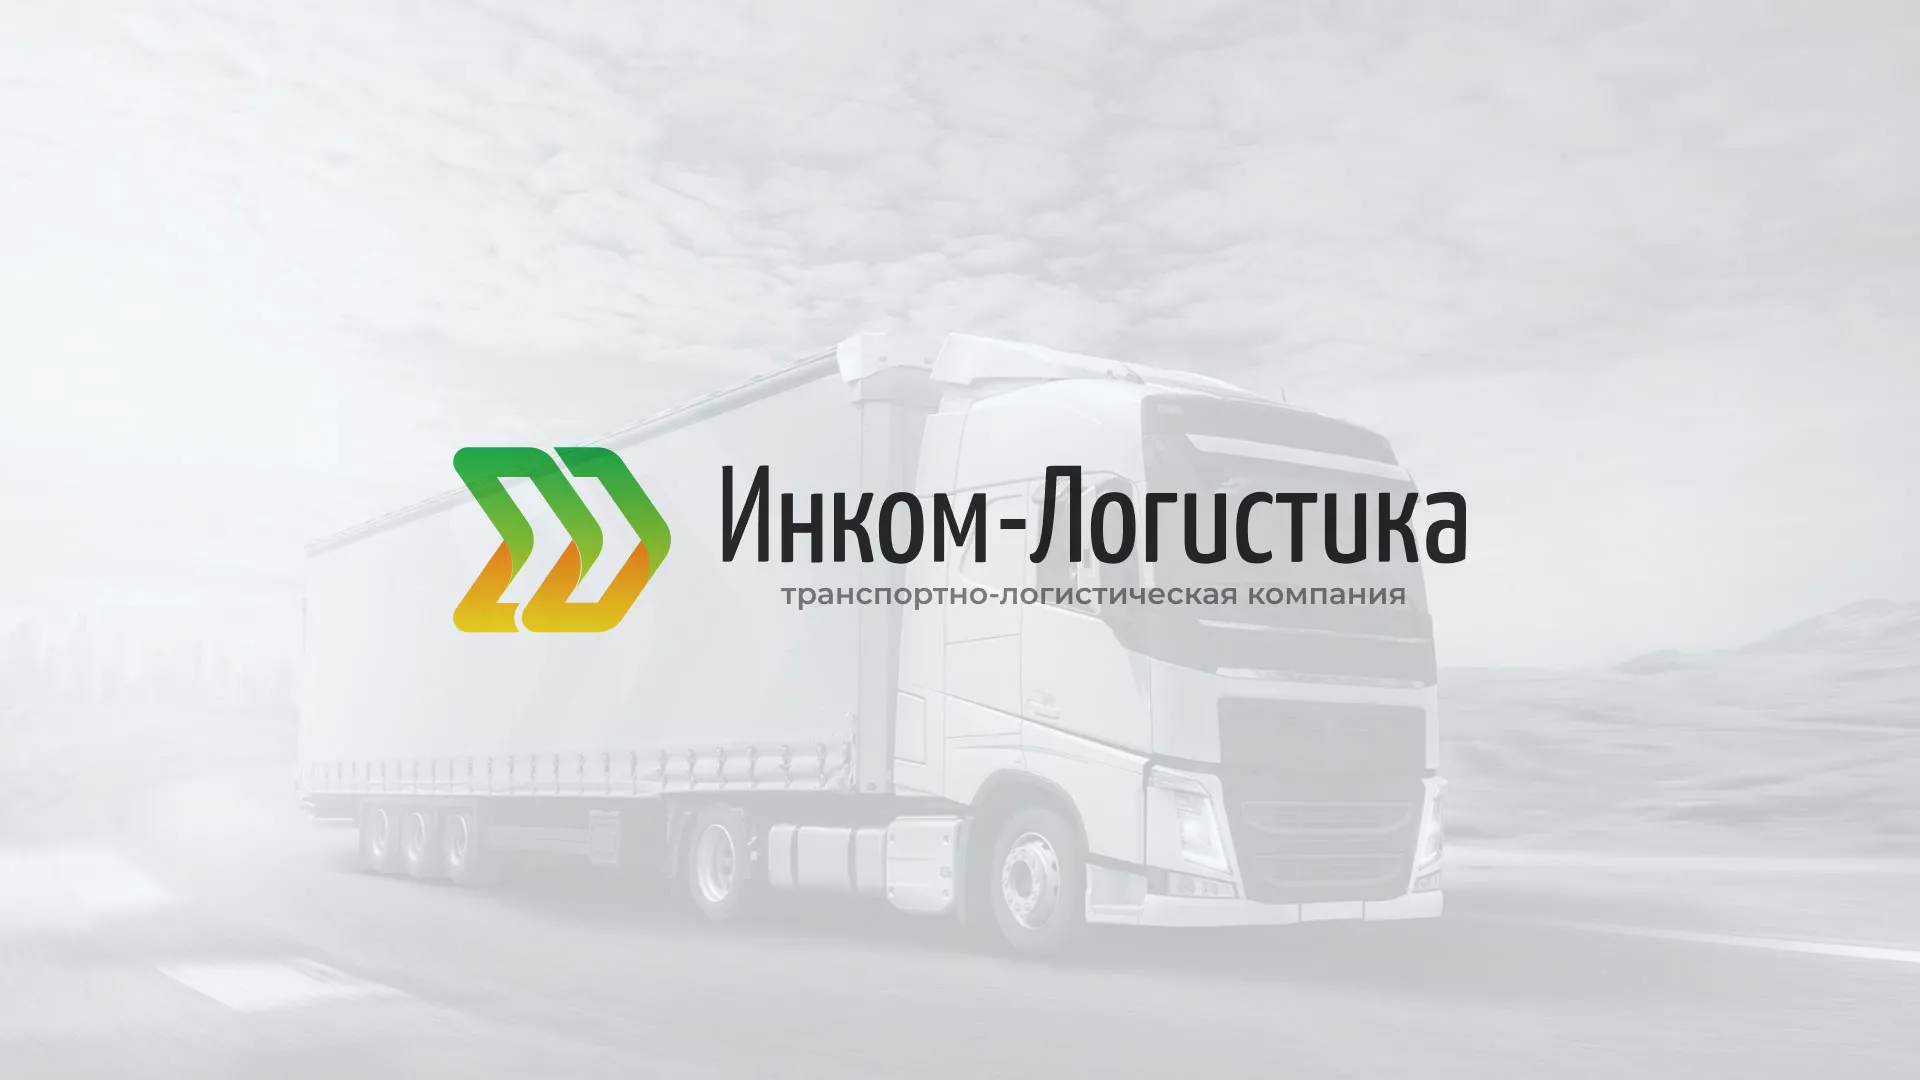 Разработка логотипа и сайта компании «Инком-Логистика» в Новотроицке